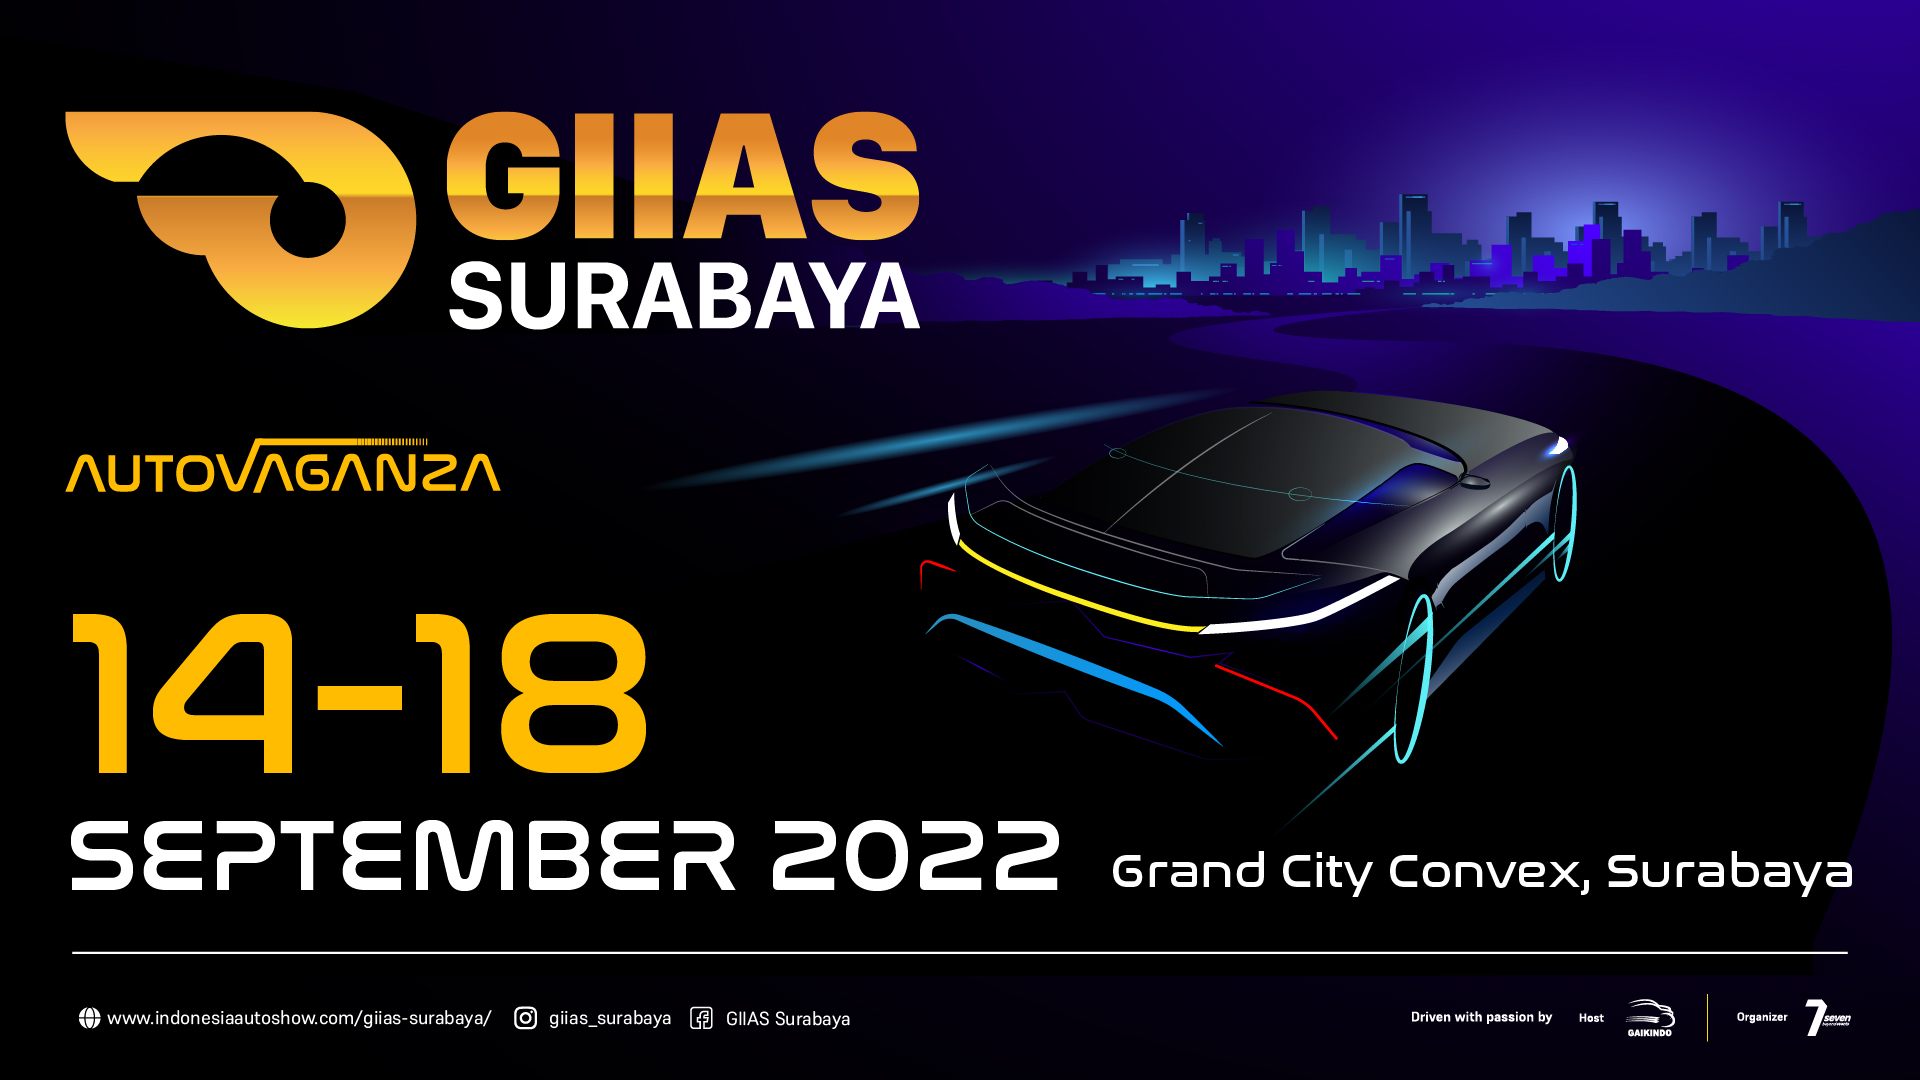 GIIAS Surabaya 14 - 18 September 2022